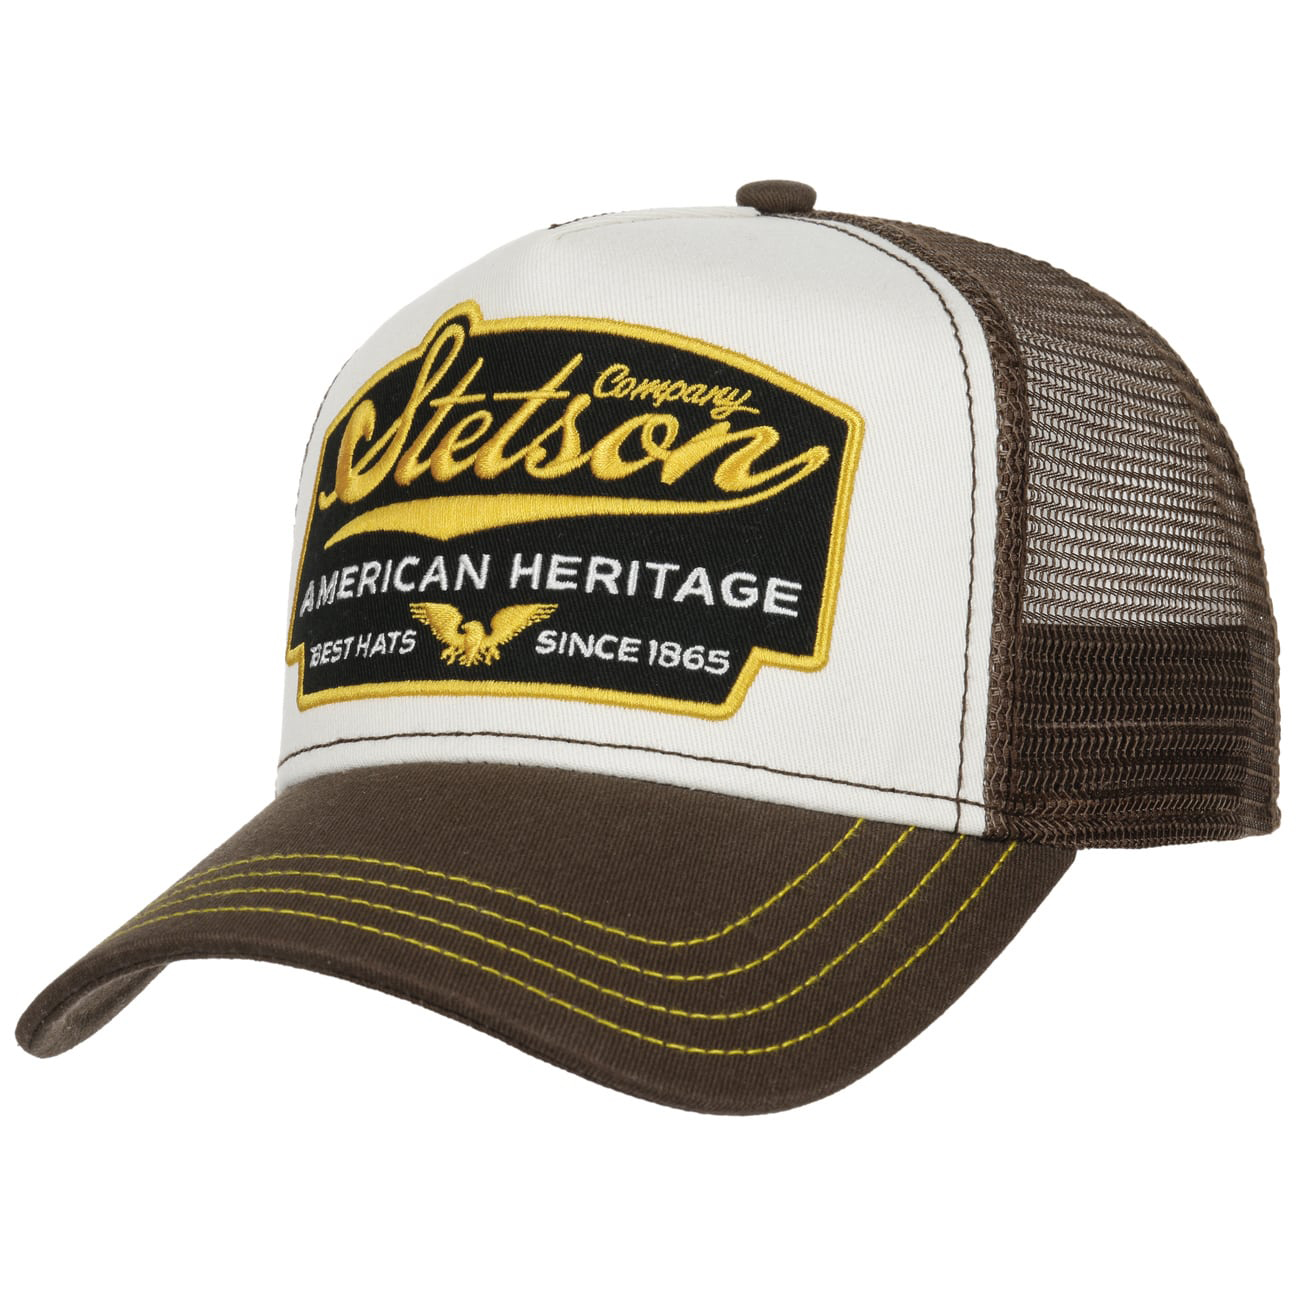 Stetson - American Heritage Trucker Cap - Brown